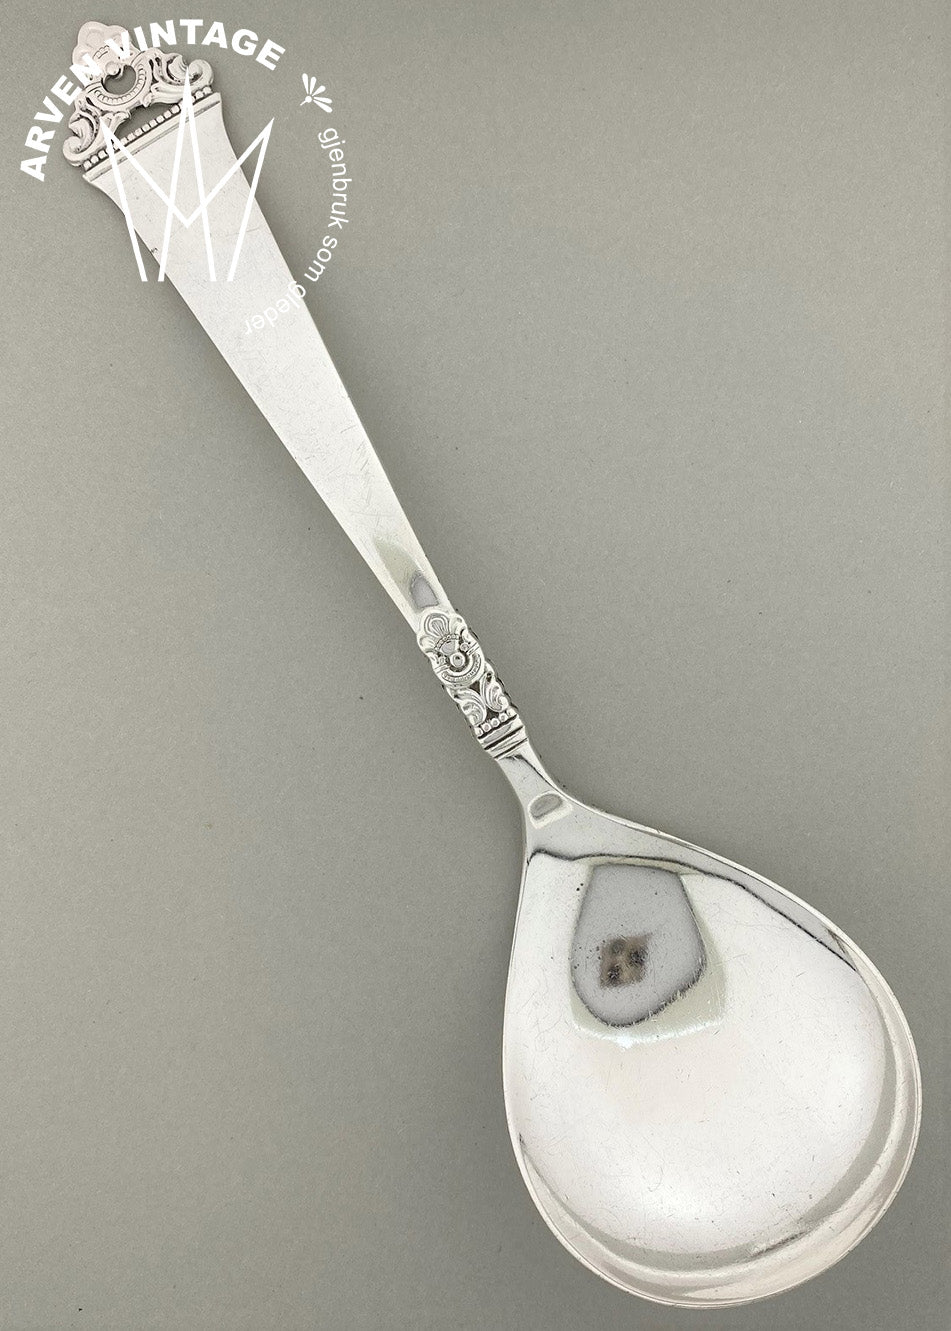 Vintage Odel cream spoon